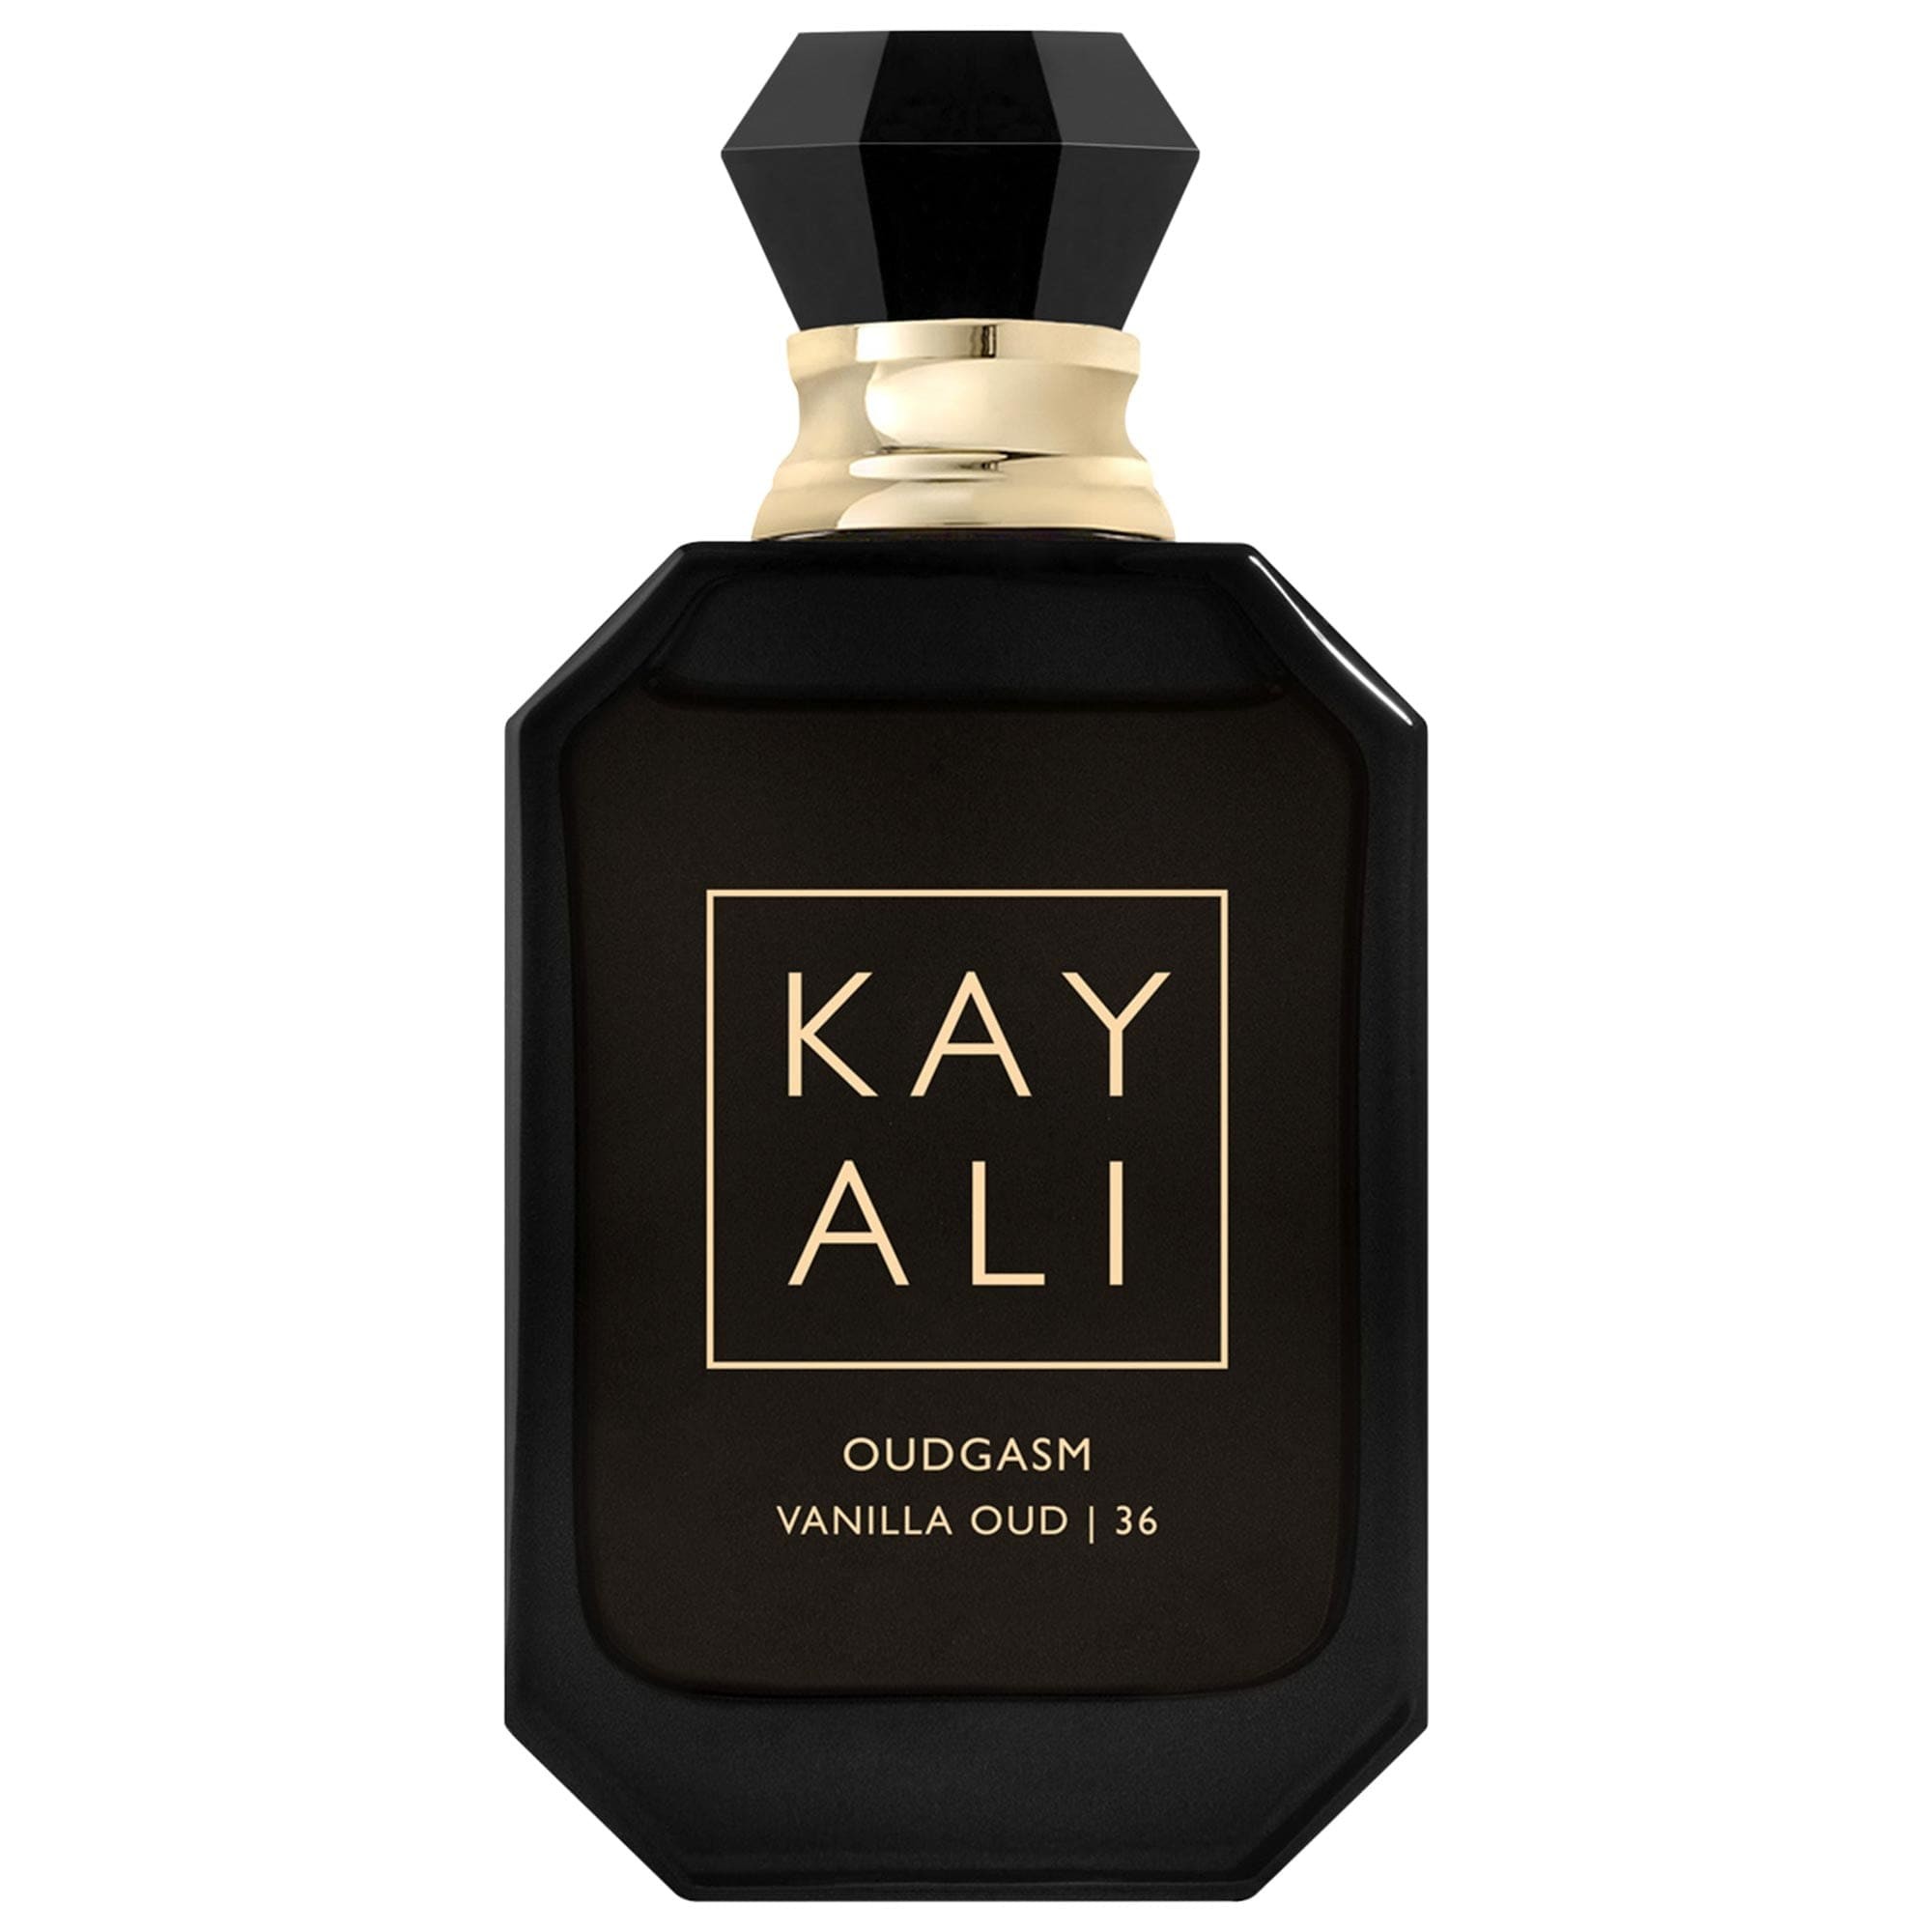 Kayali Oudgasm Vanilla Oud | 36 Eau de Parfum Intense 50 mL